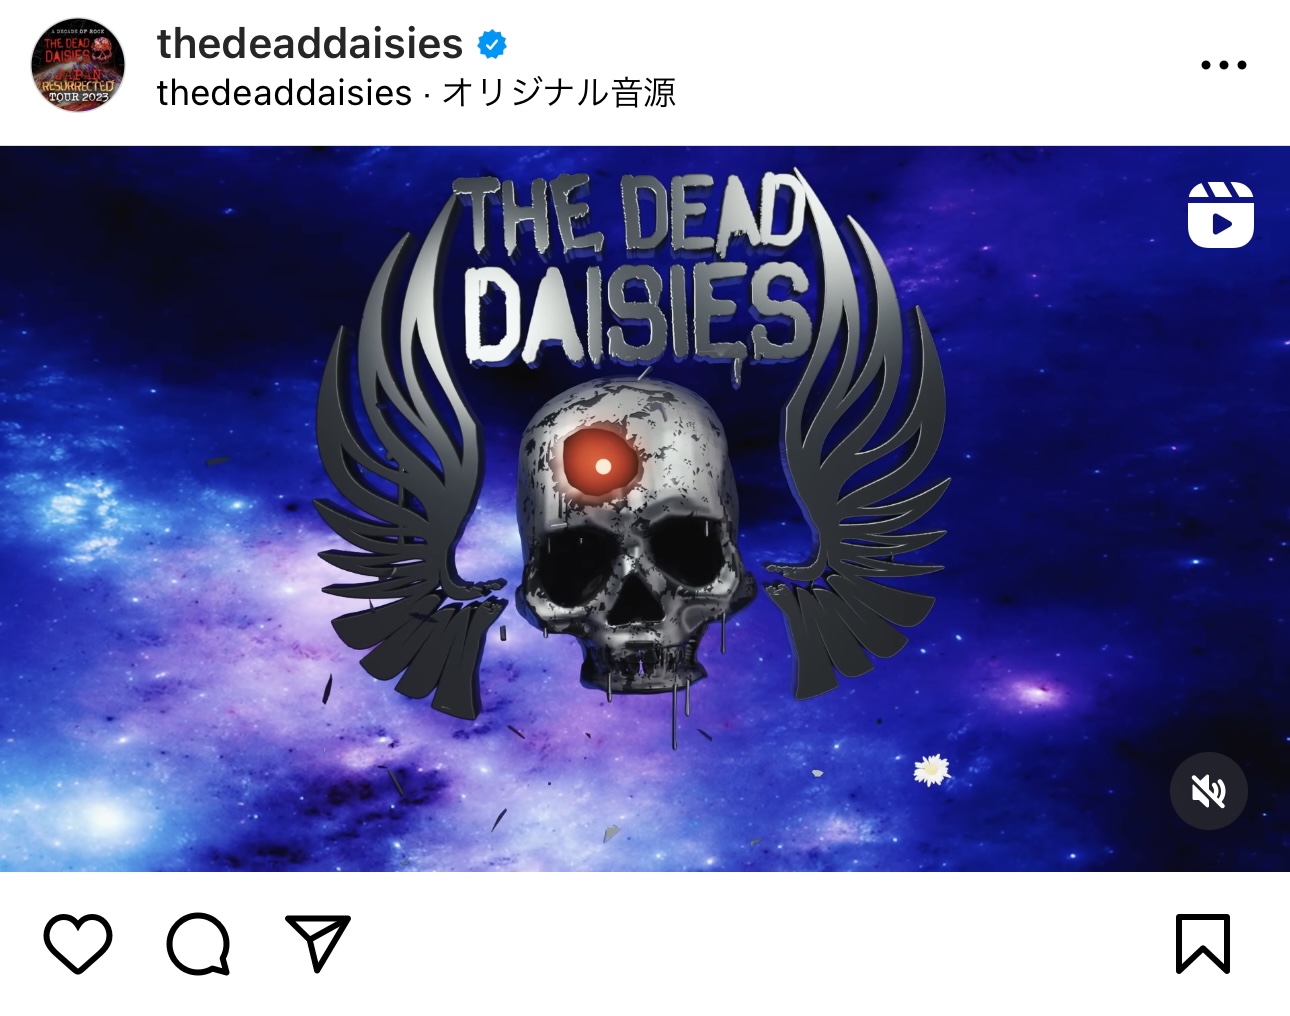 The Dead Daisiesの来日公演を告知するInstagramの投稿